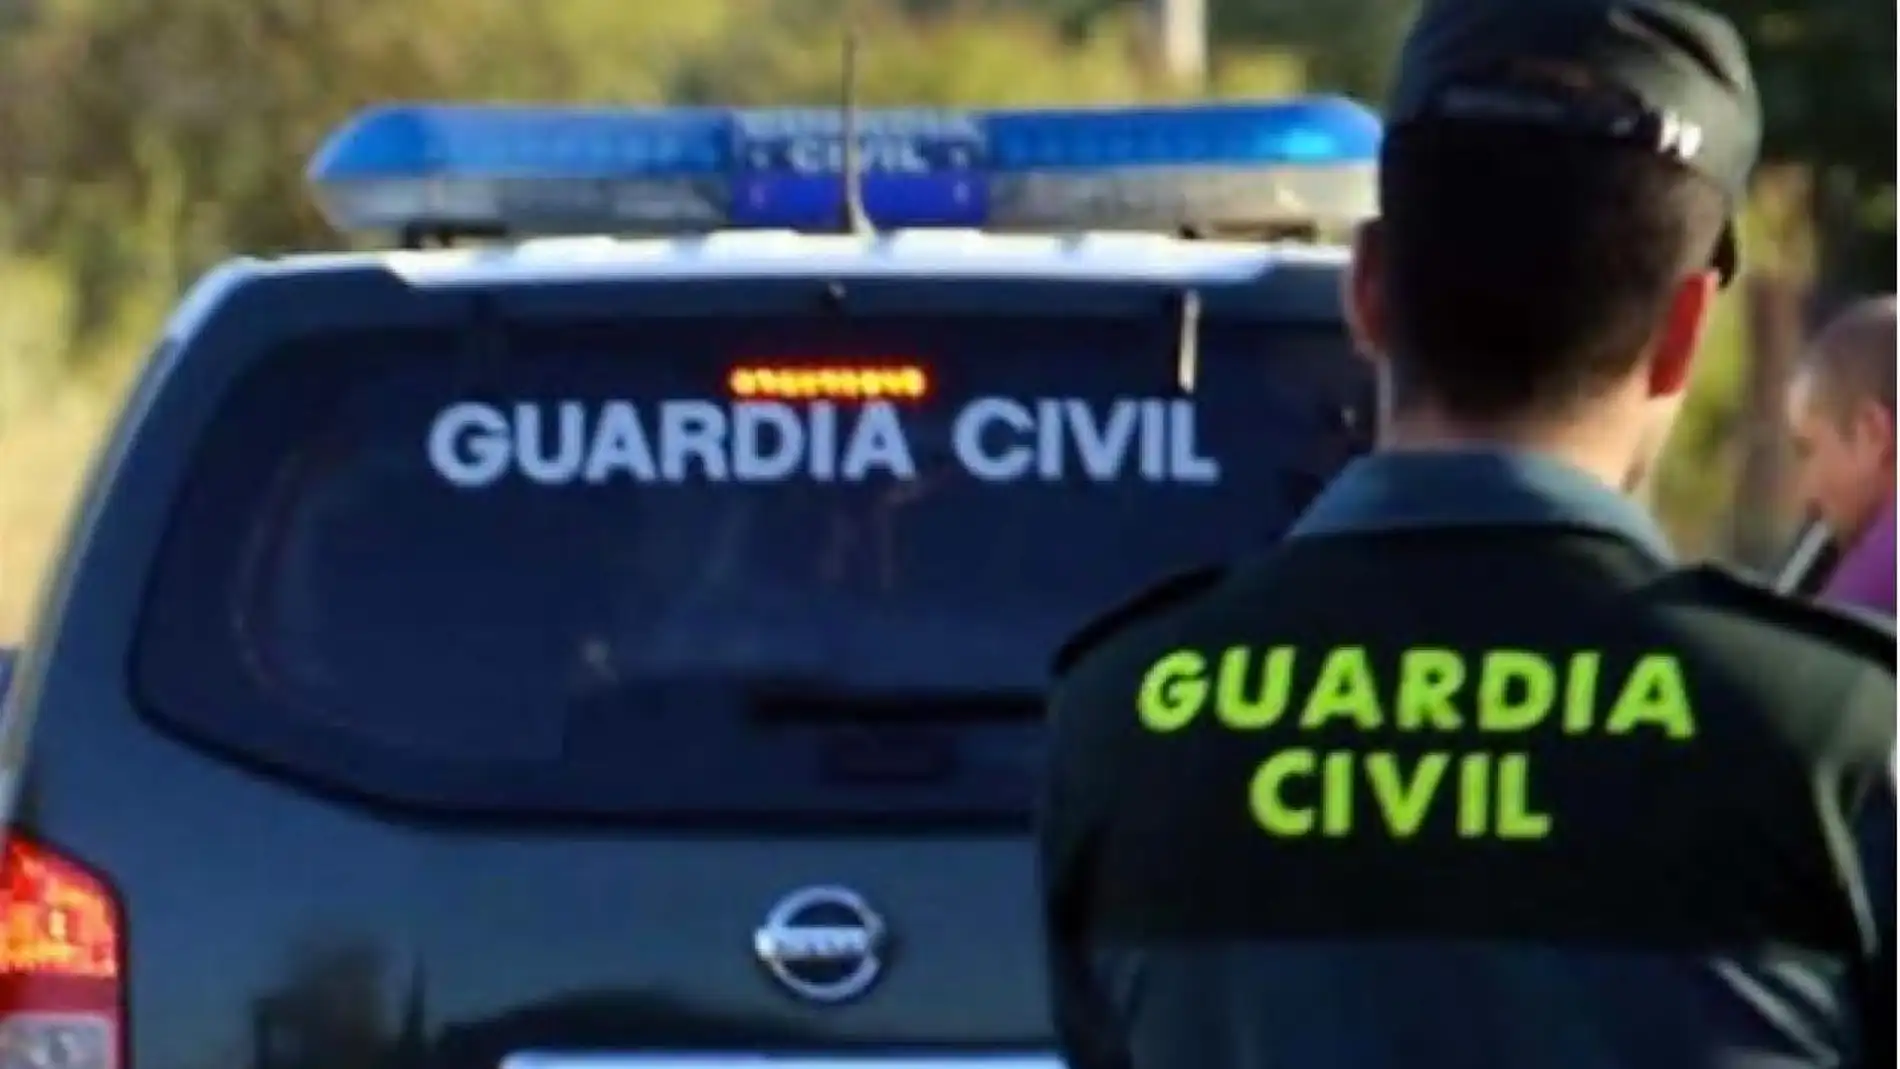  Guardia Civil